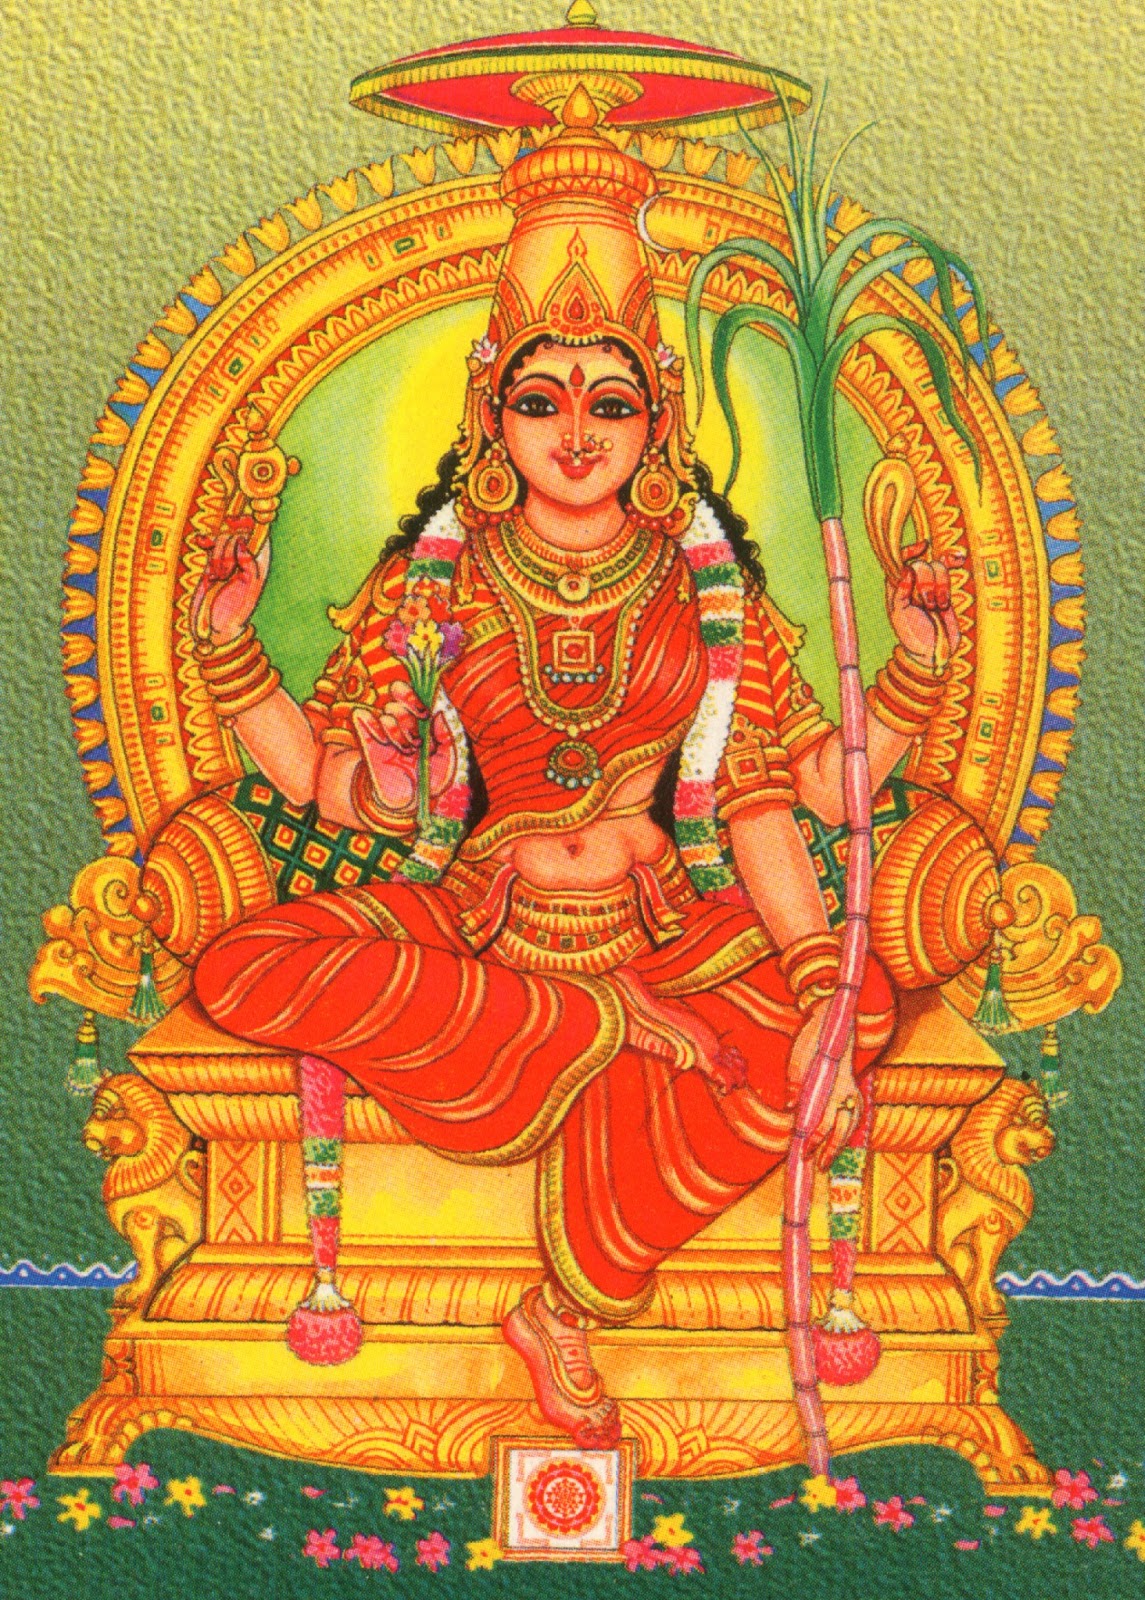 srividya: Different aspects of sri lalita tripurasundari